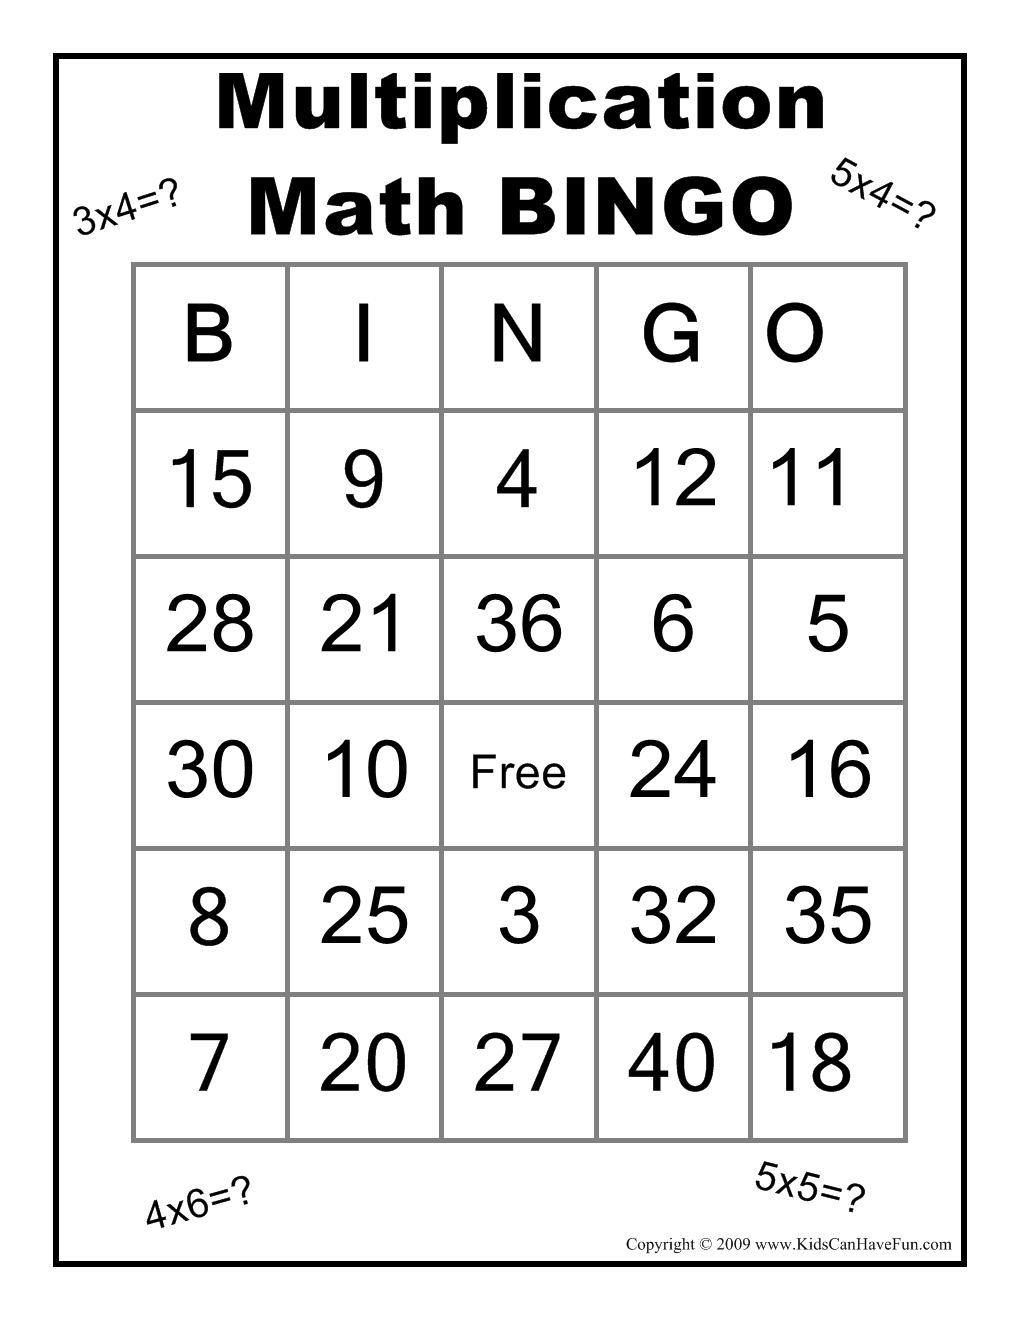 Multiplication Math Bingo Game | Wiskunde